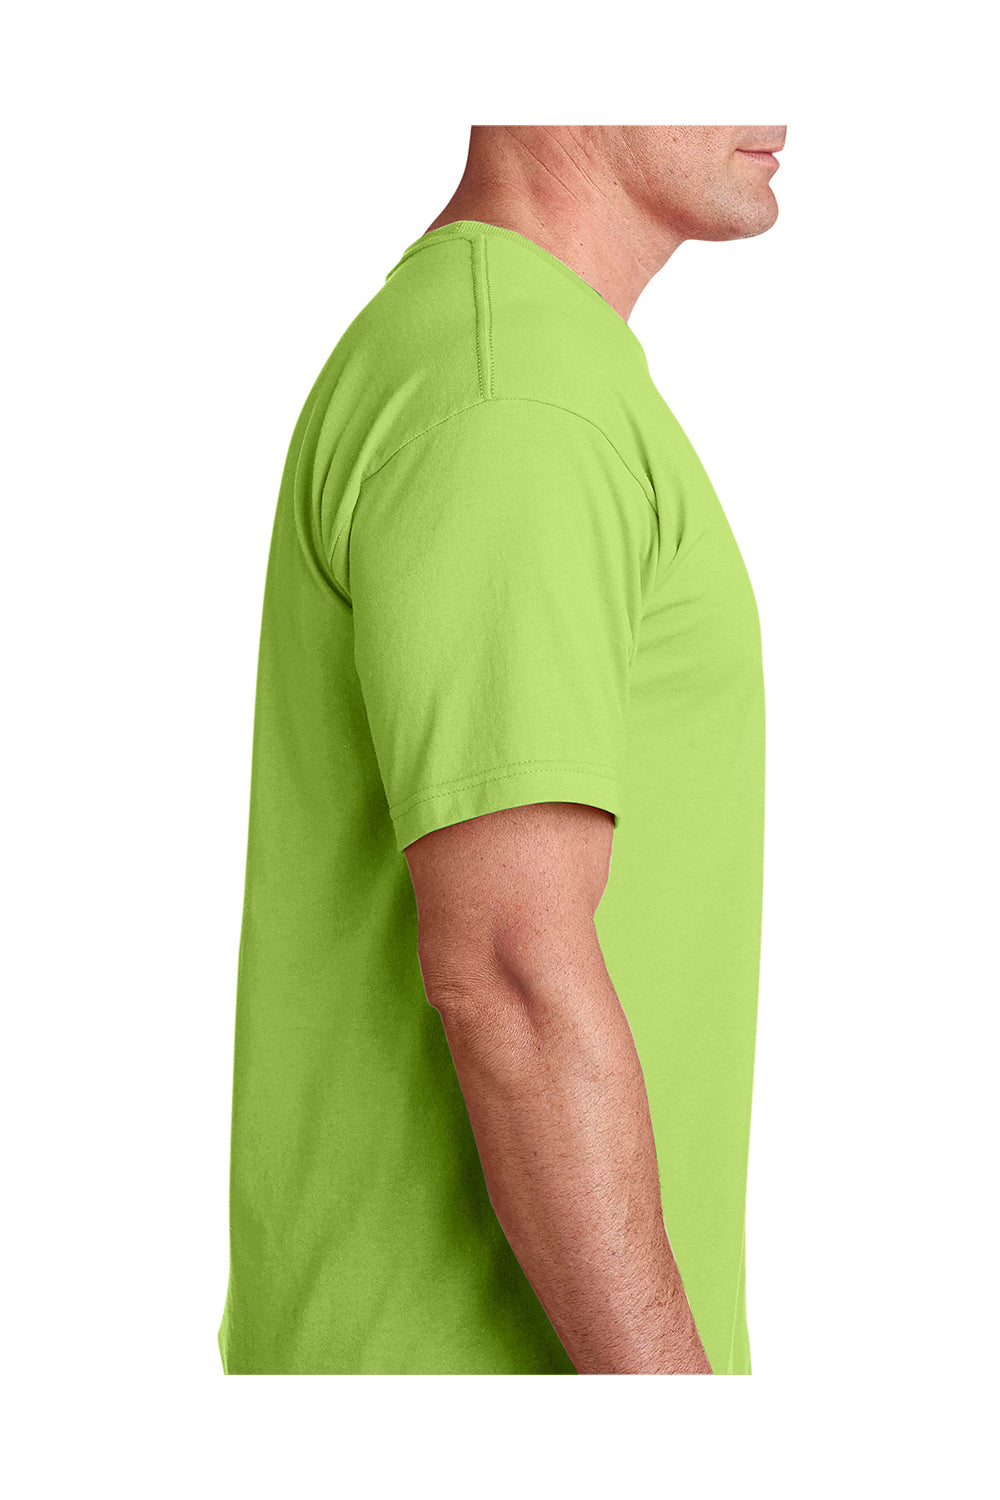 Bayside BA5040 Mens USA Made Short Sleeve Crewneck T-Shirt Lime Green Model Side